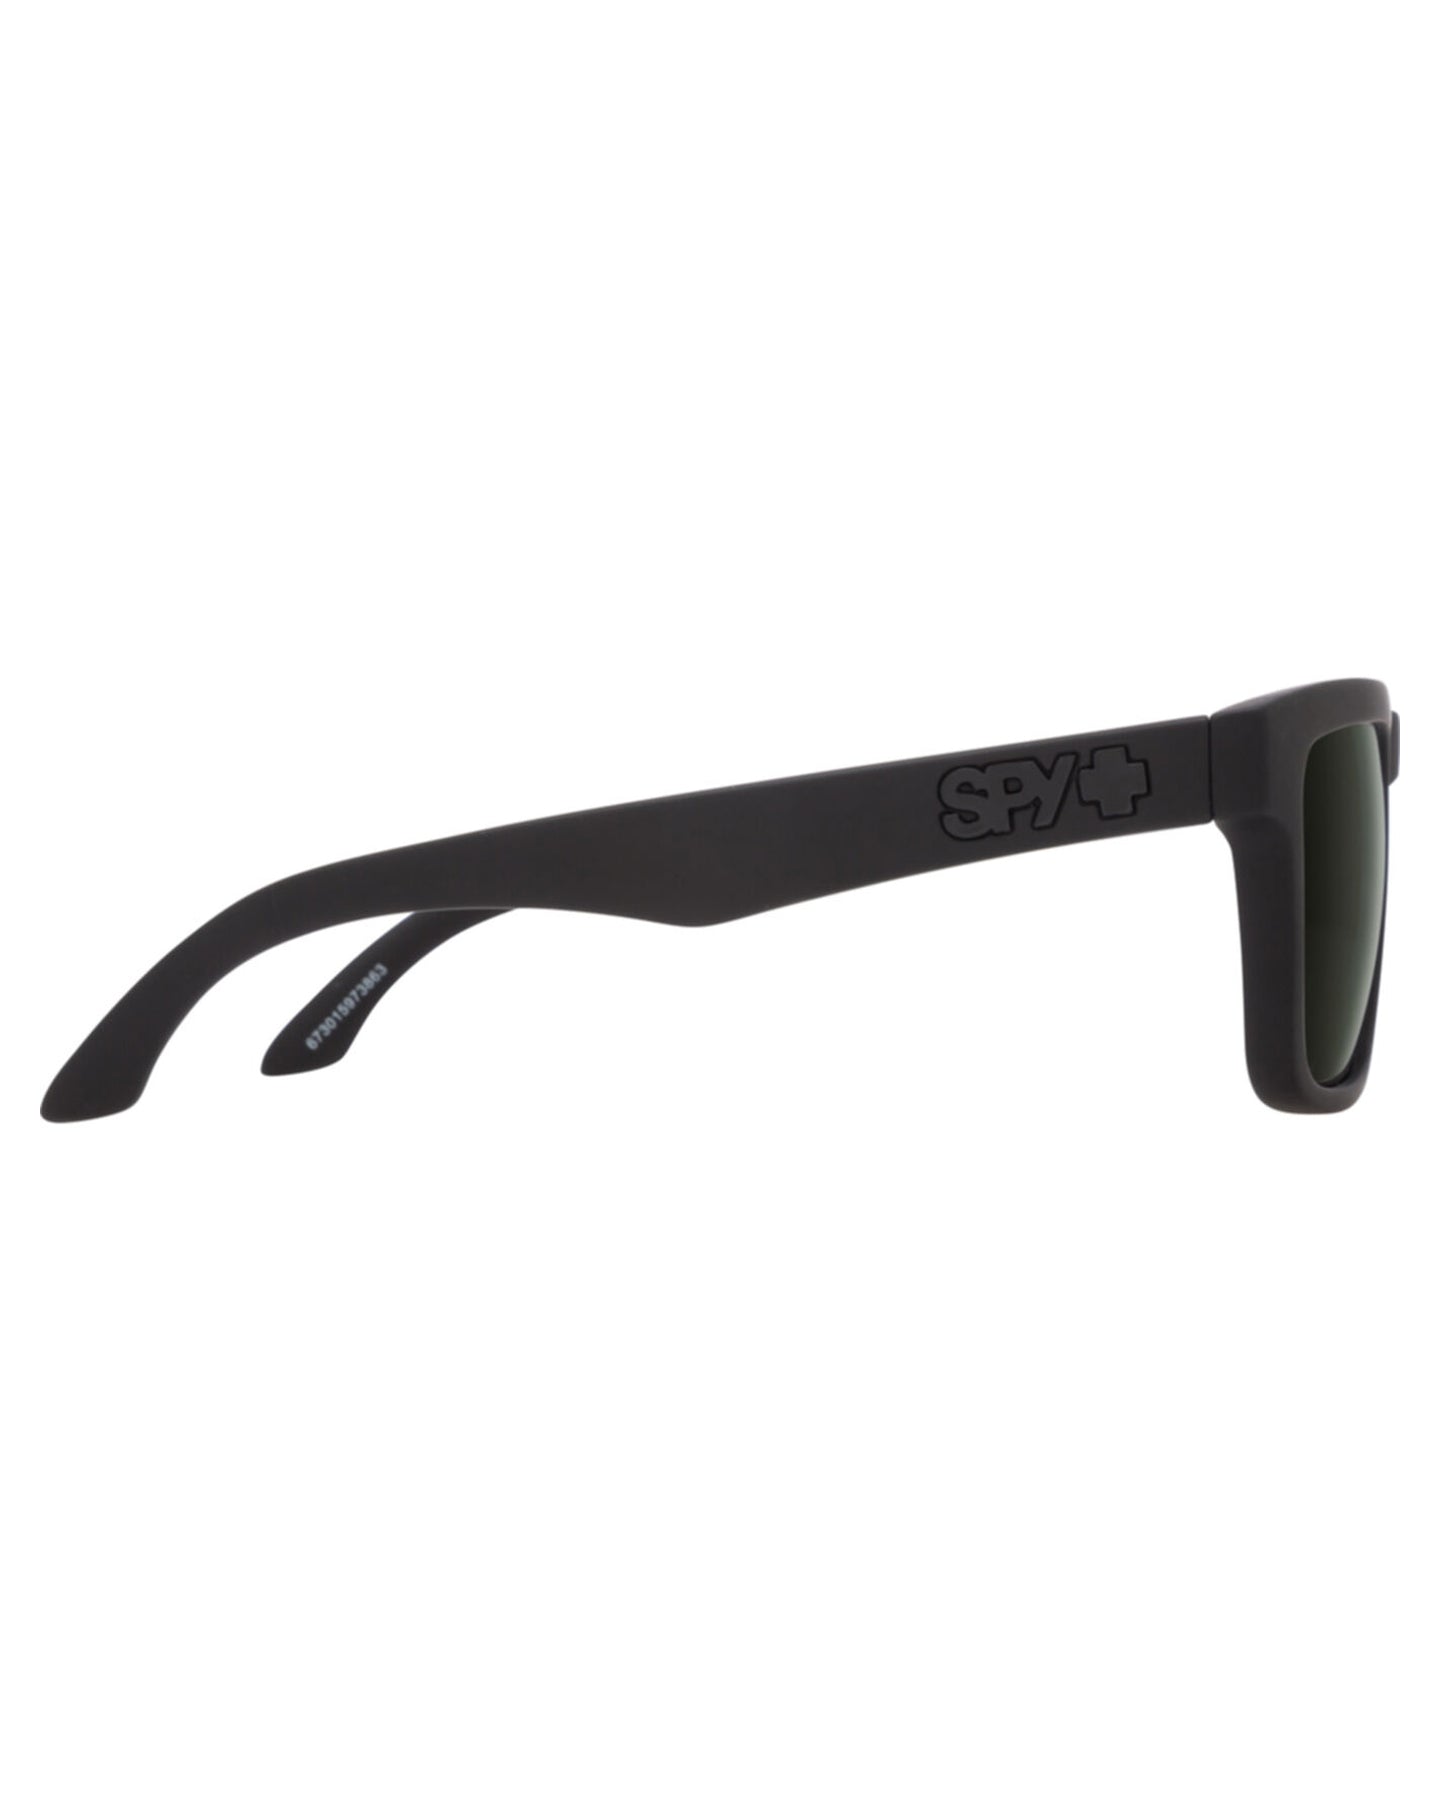 Spy Helm Soft Matte Black - Happy Gray Green Sunglasses - SnowSkiersWarehouse